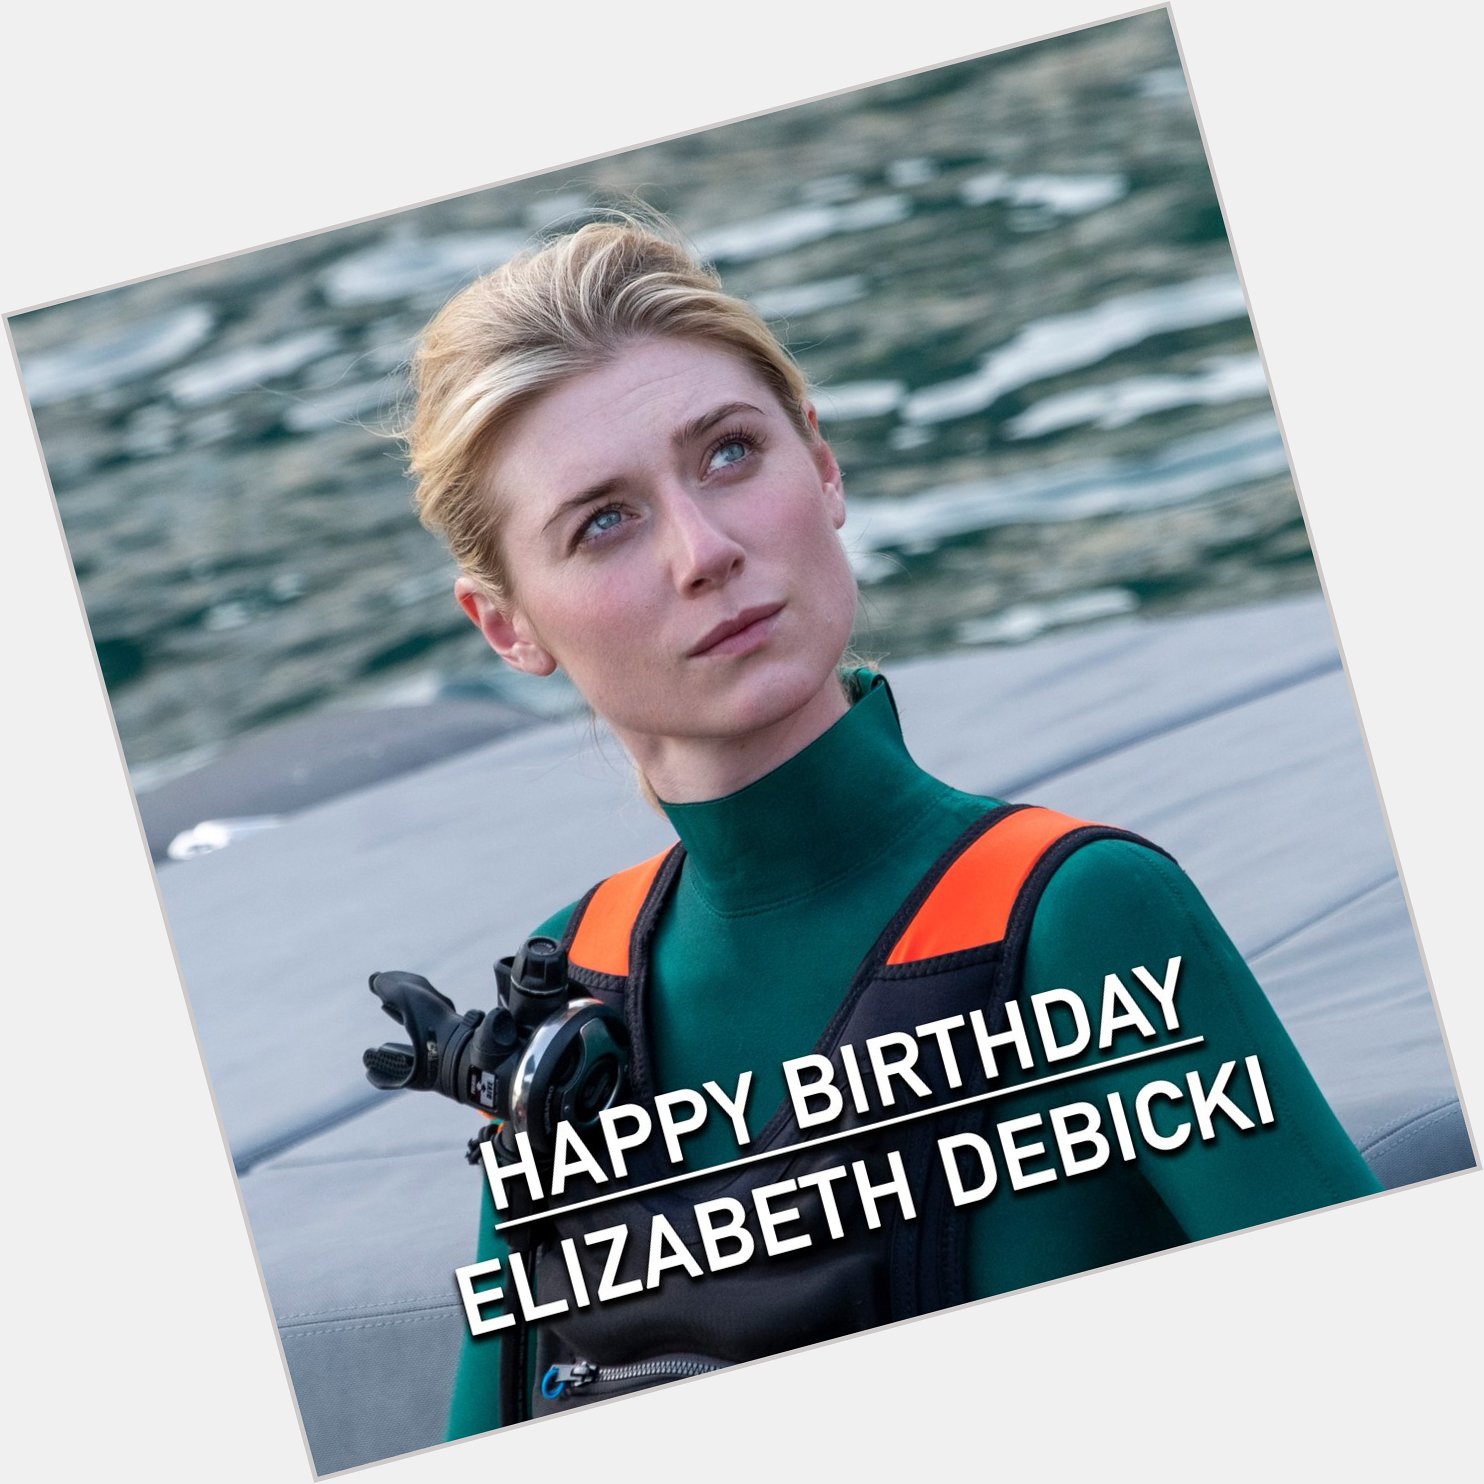 Happy Birthday to Elizabeth Debicki, who plays Kat in Christopher Nolan\s upcoming Epic Thriller 